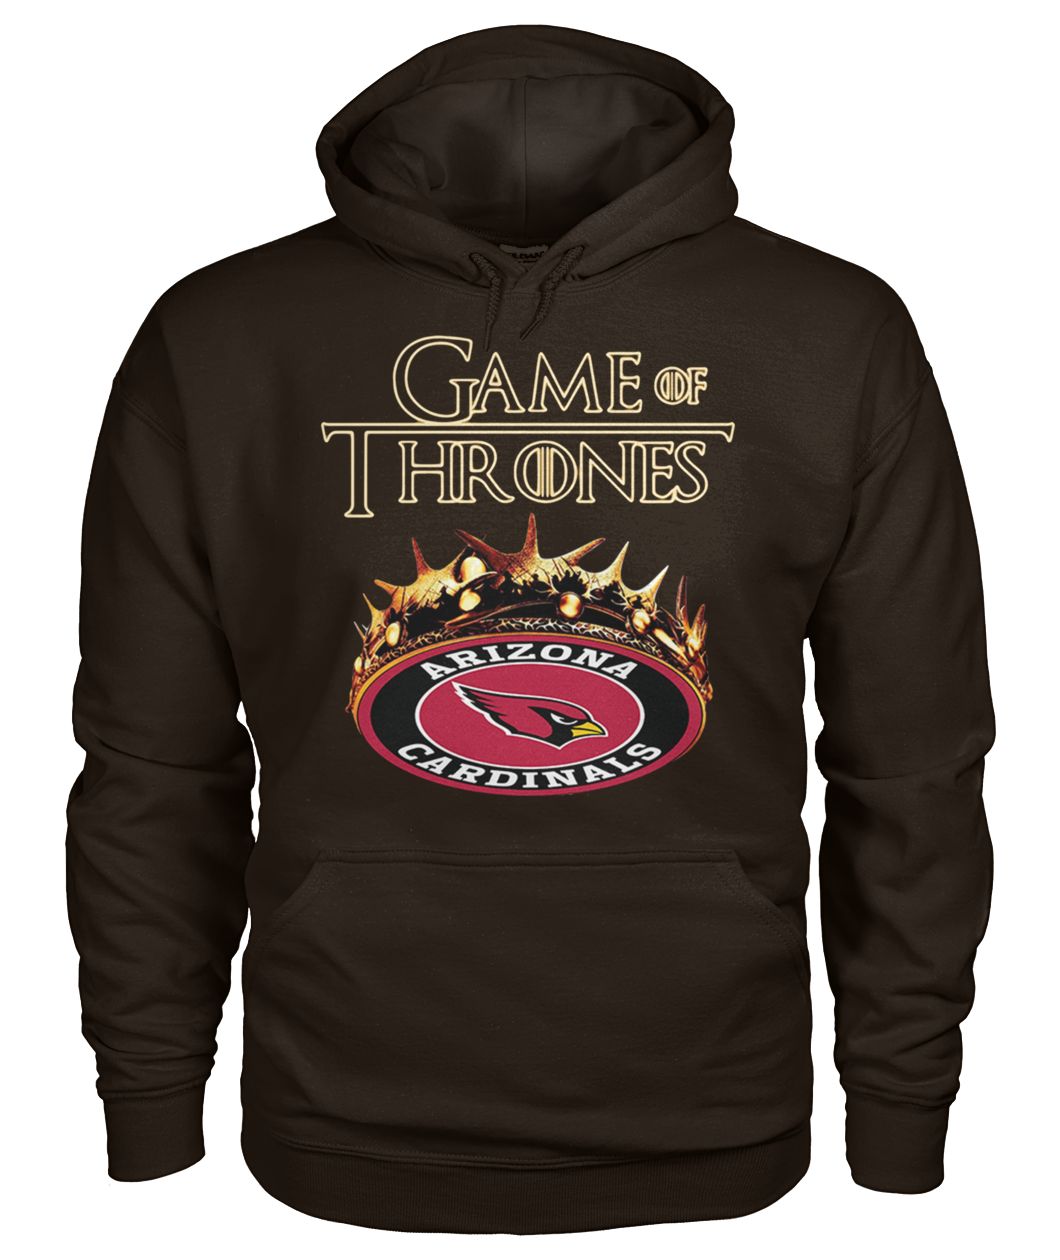 Game of thrones crown arizona cardinals gildan hoodie